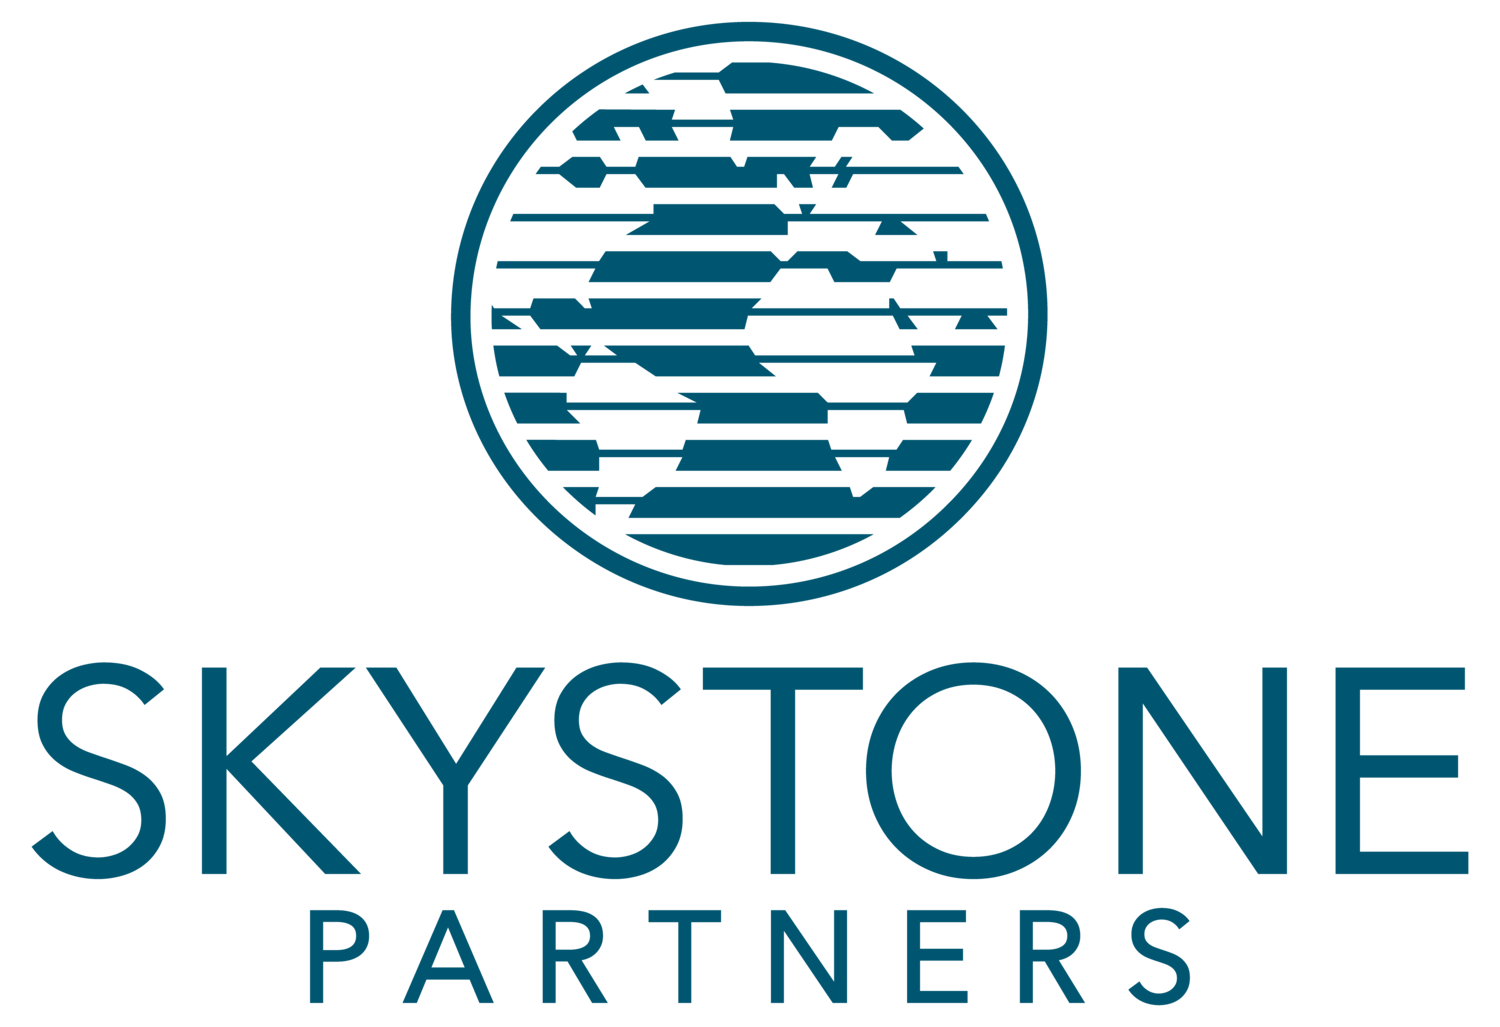 Skystone Partners